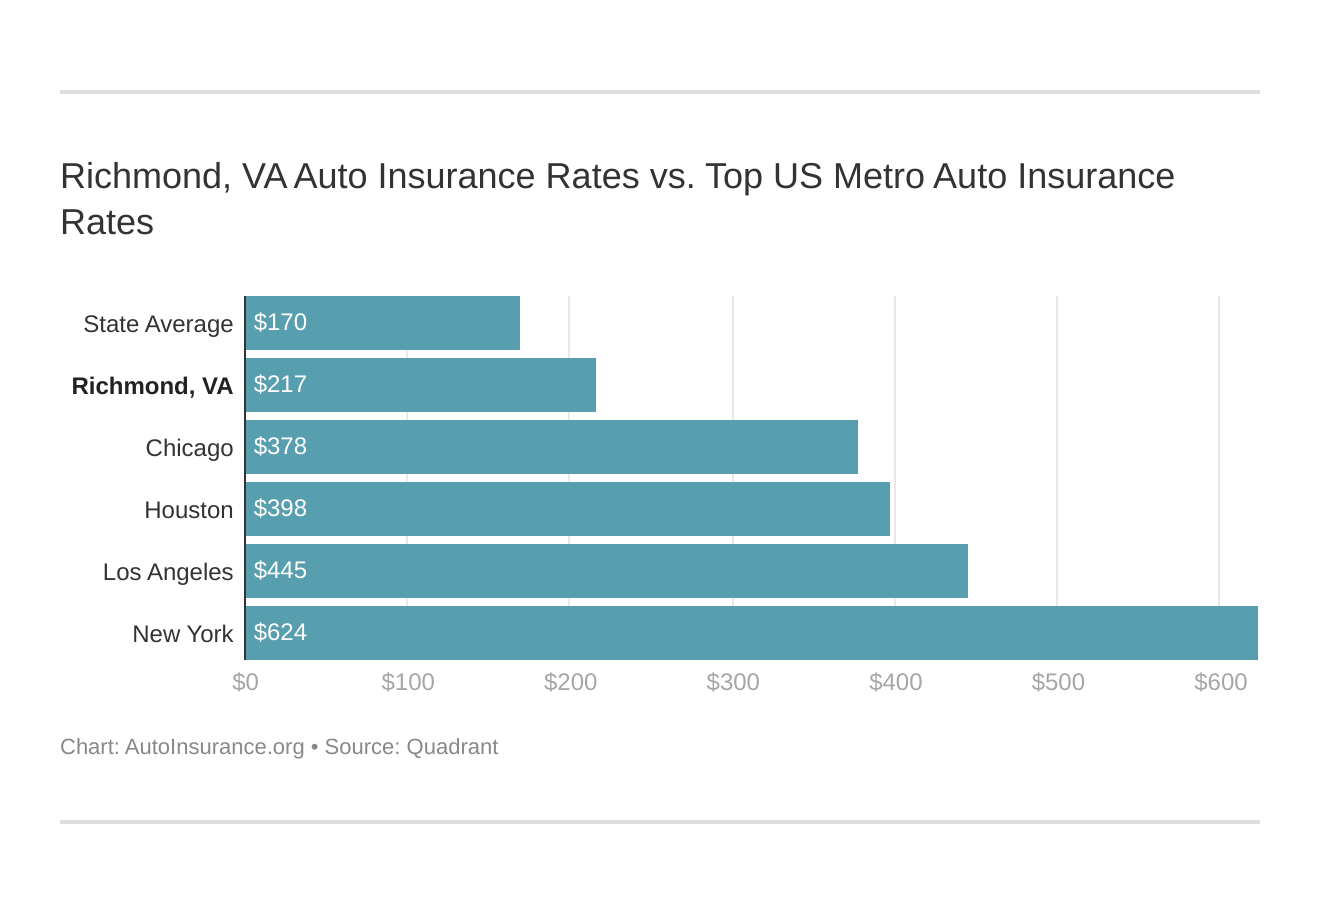 Richmond, VA Auto Insurance Rates vs. Top US Metro Auto Insurance Rates